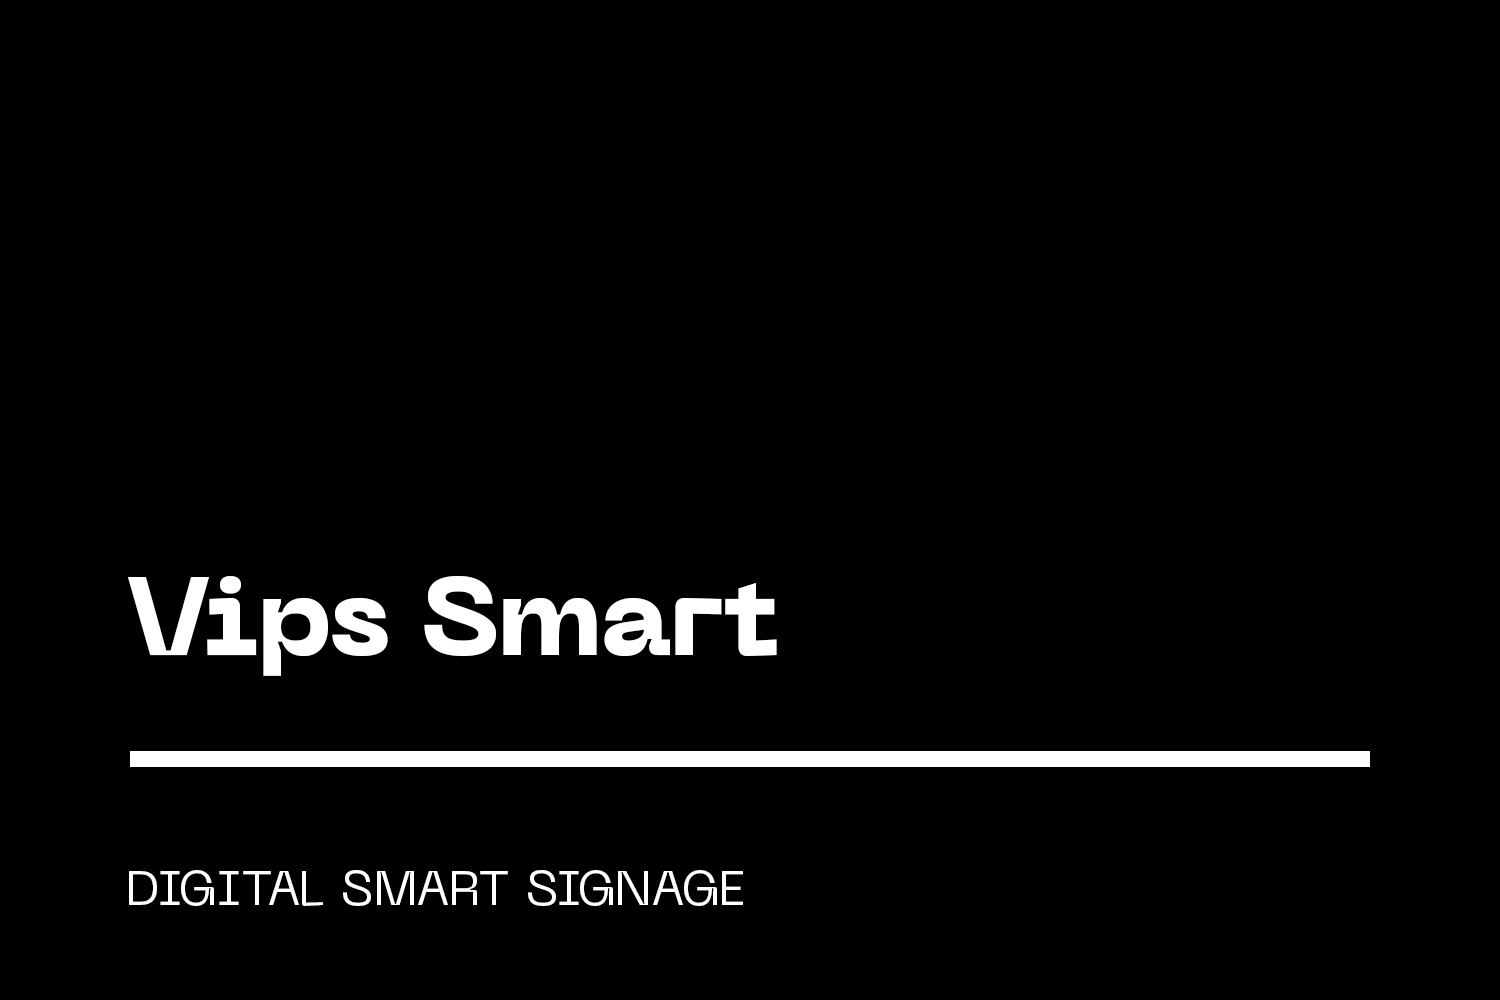 Smart Signage — Vips Smart